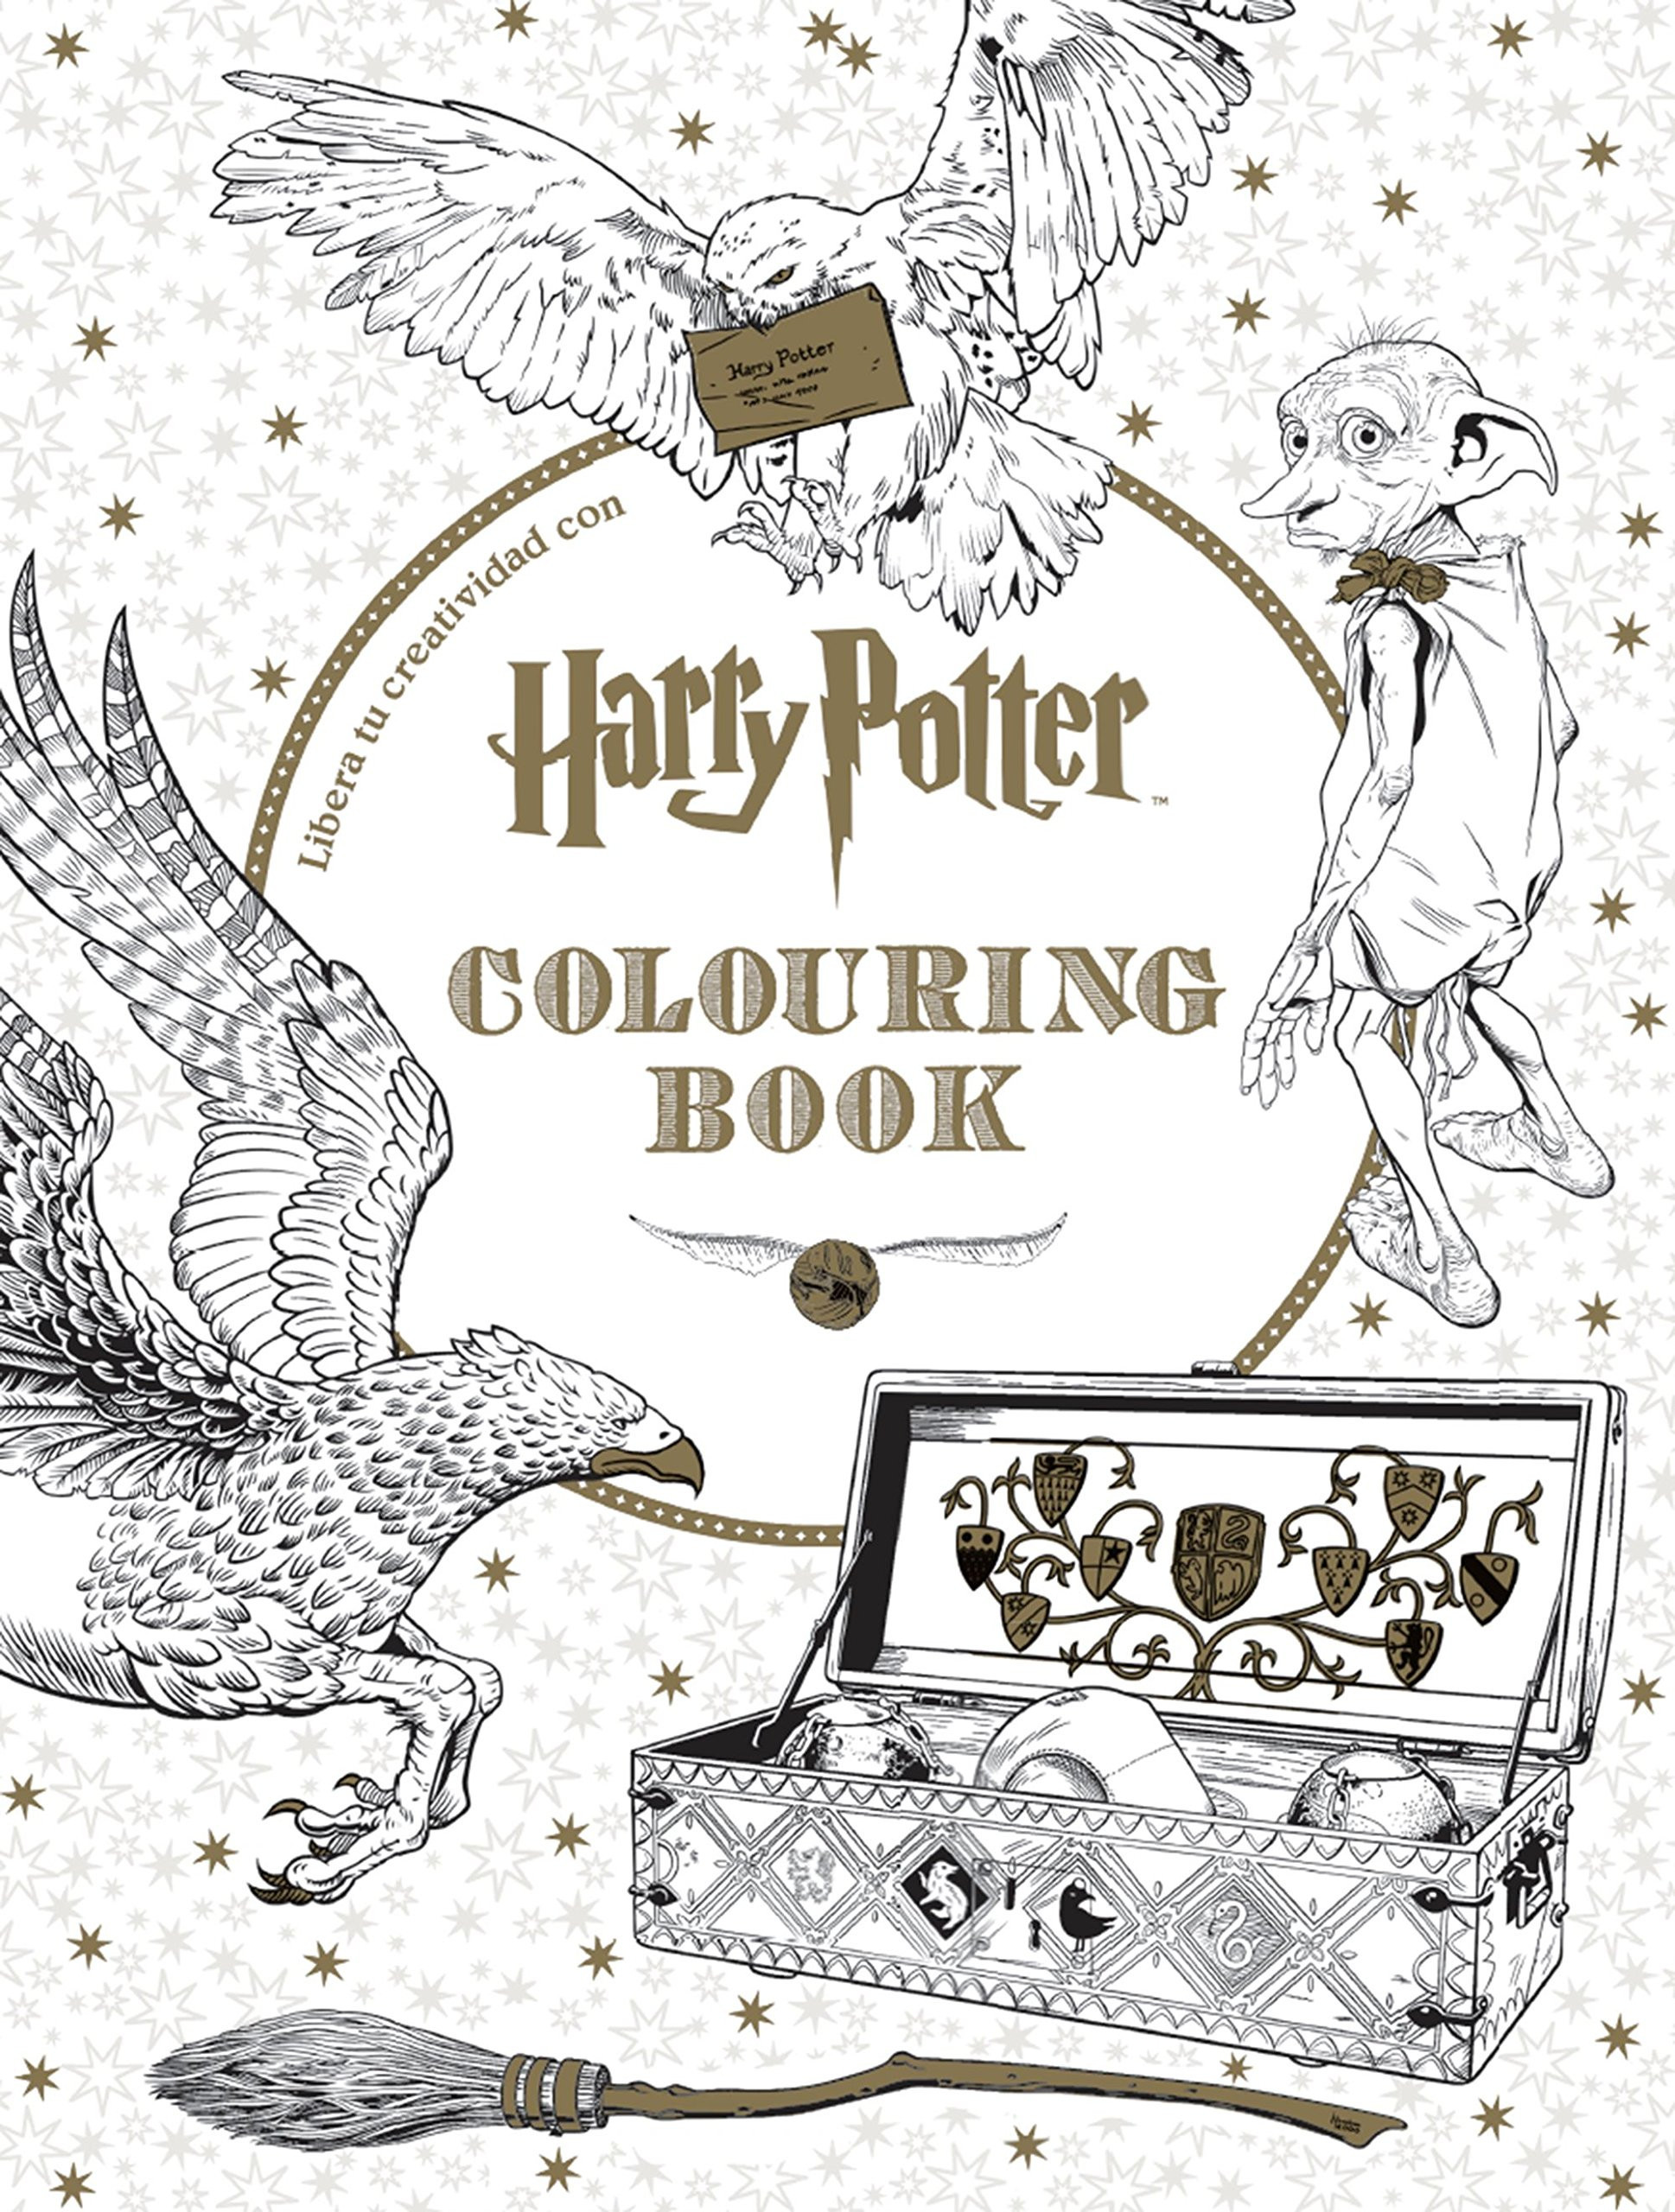 Libro para colorear Harry Potter por 14,95€ – 